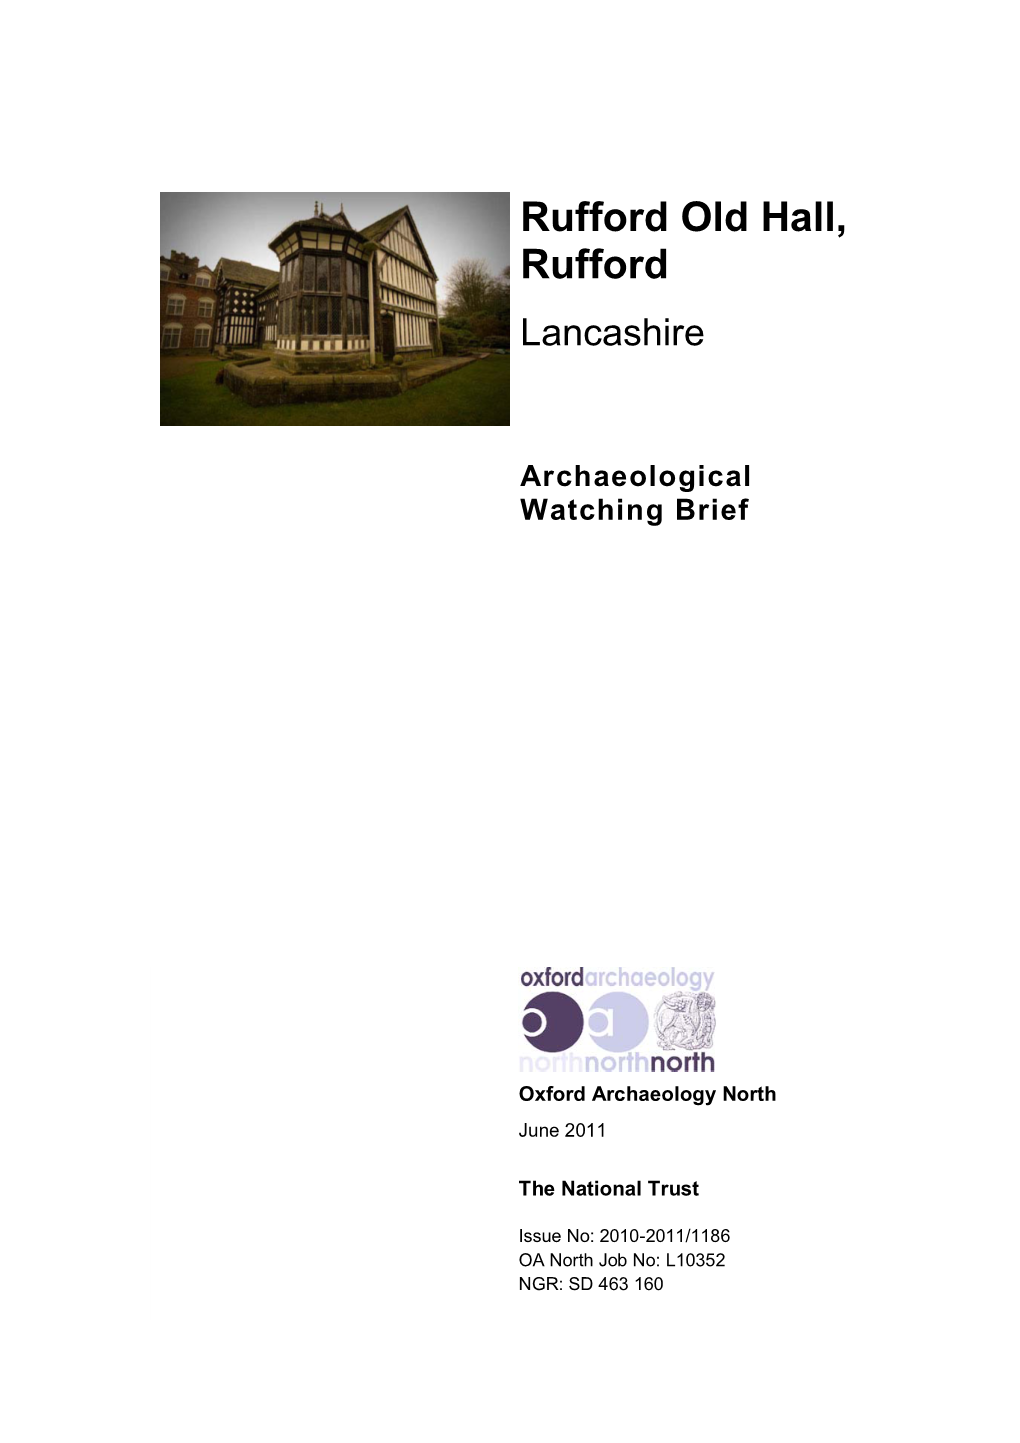 Rufford Old Hall, Rufford Lancashire